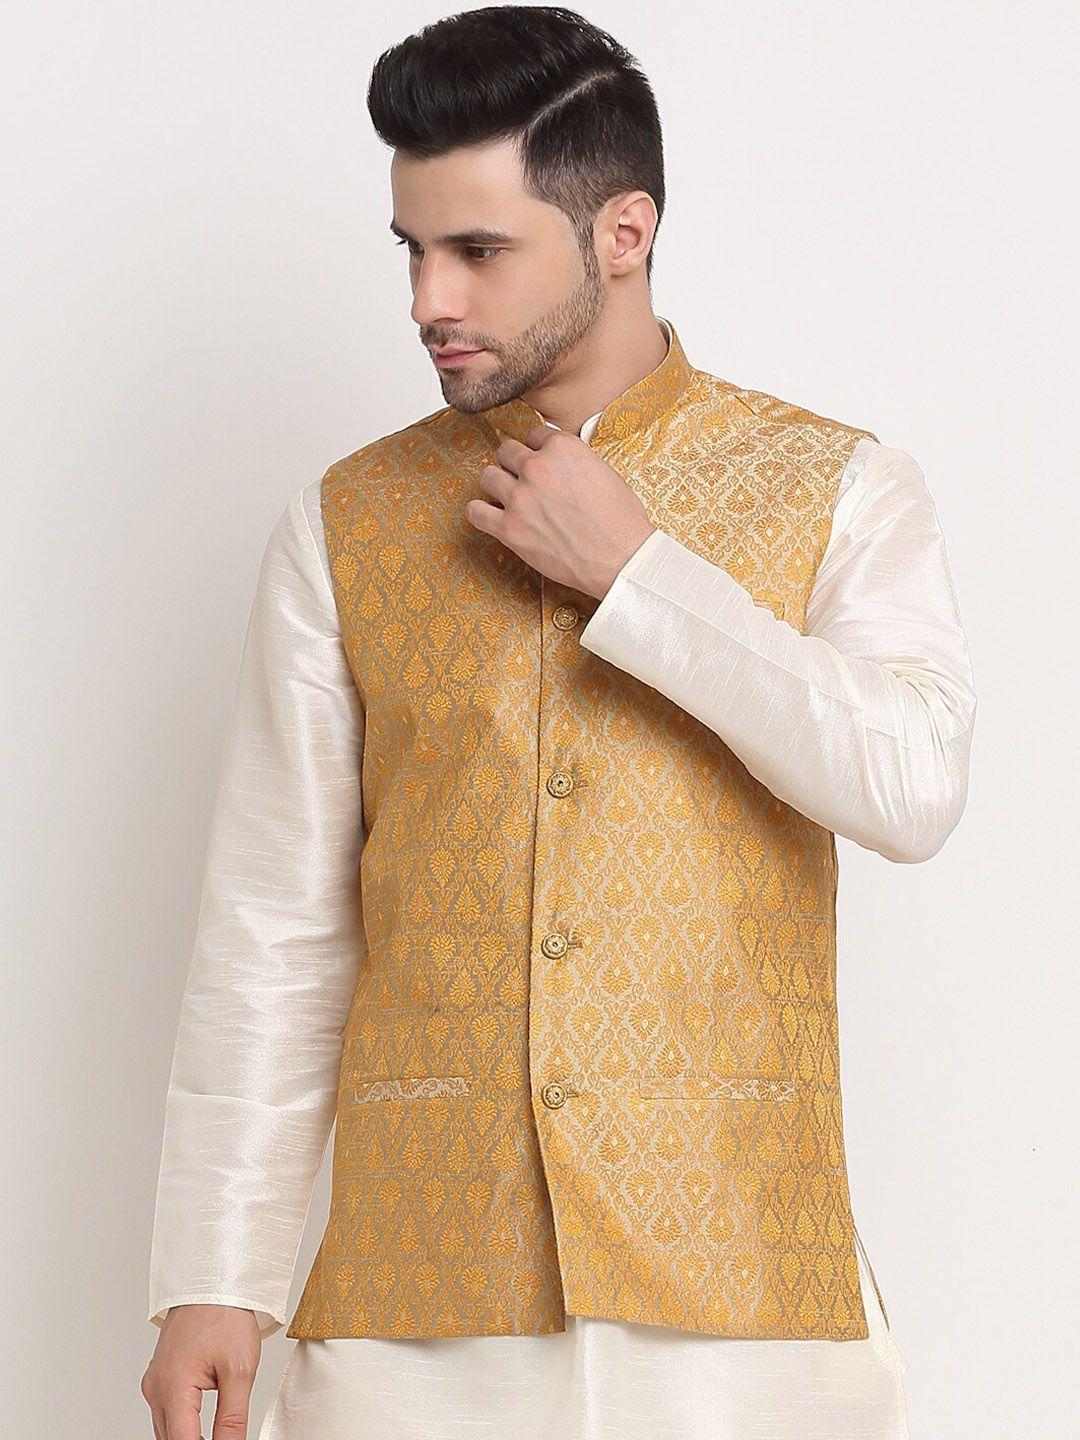 kraft india men gold-coloured jacquard woven design nehru jacket